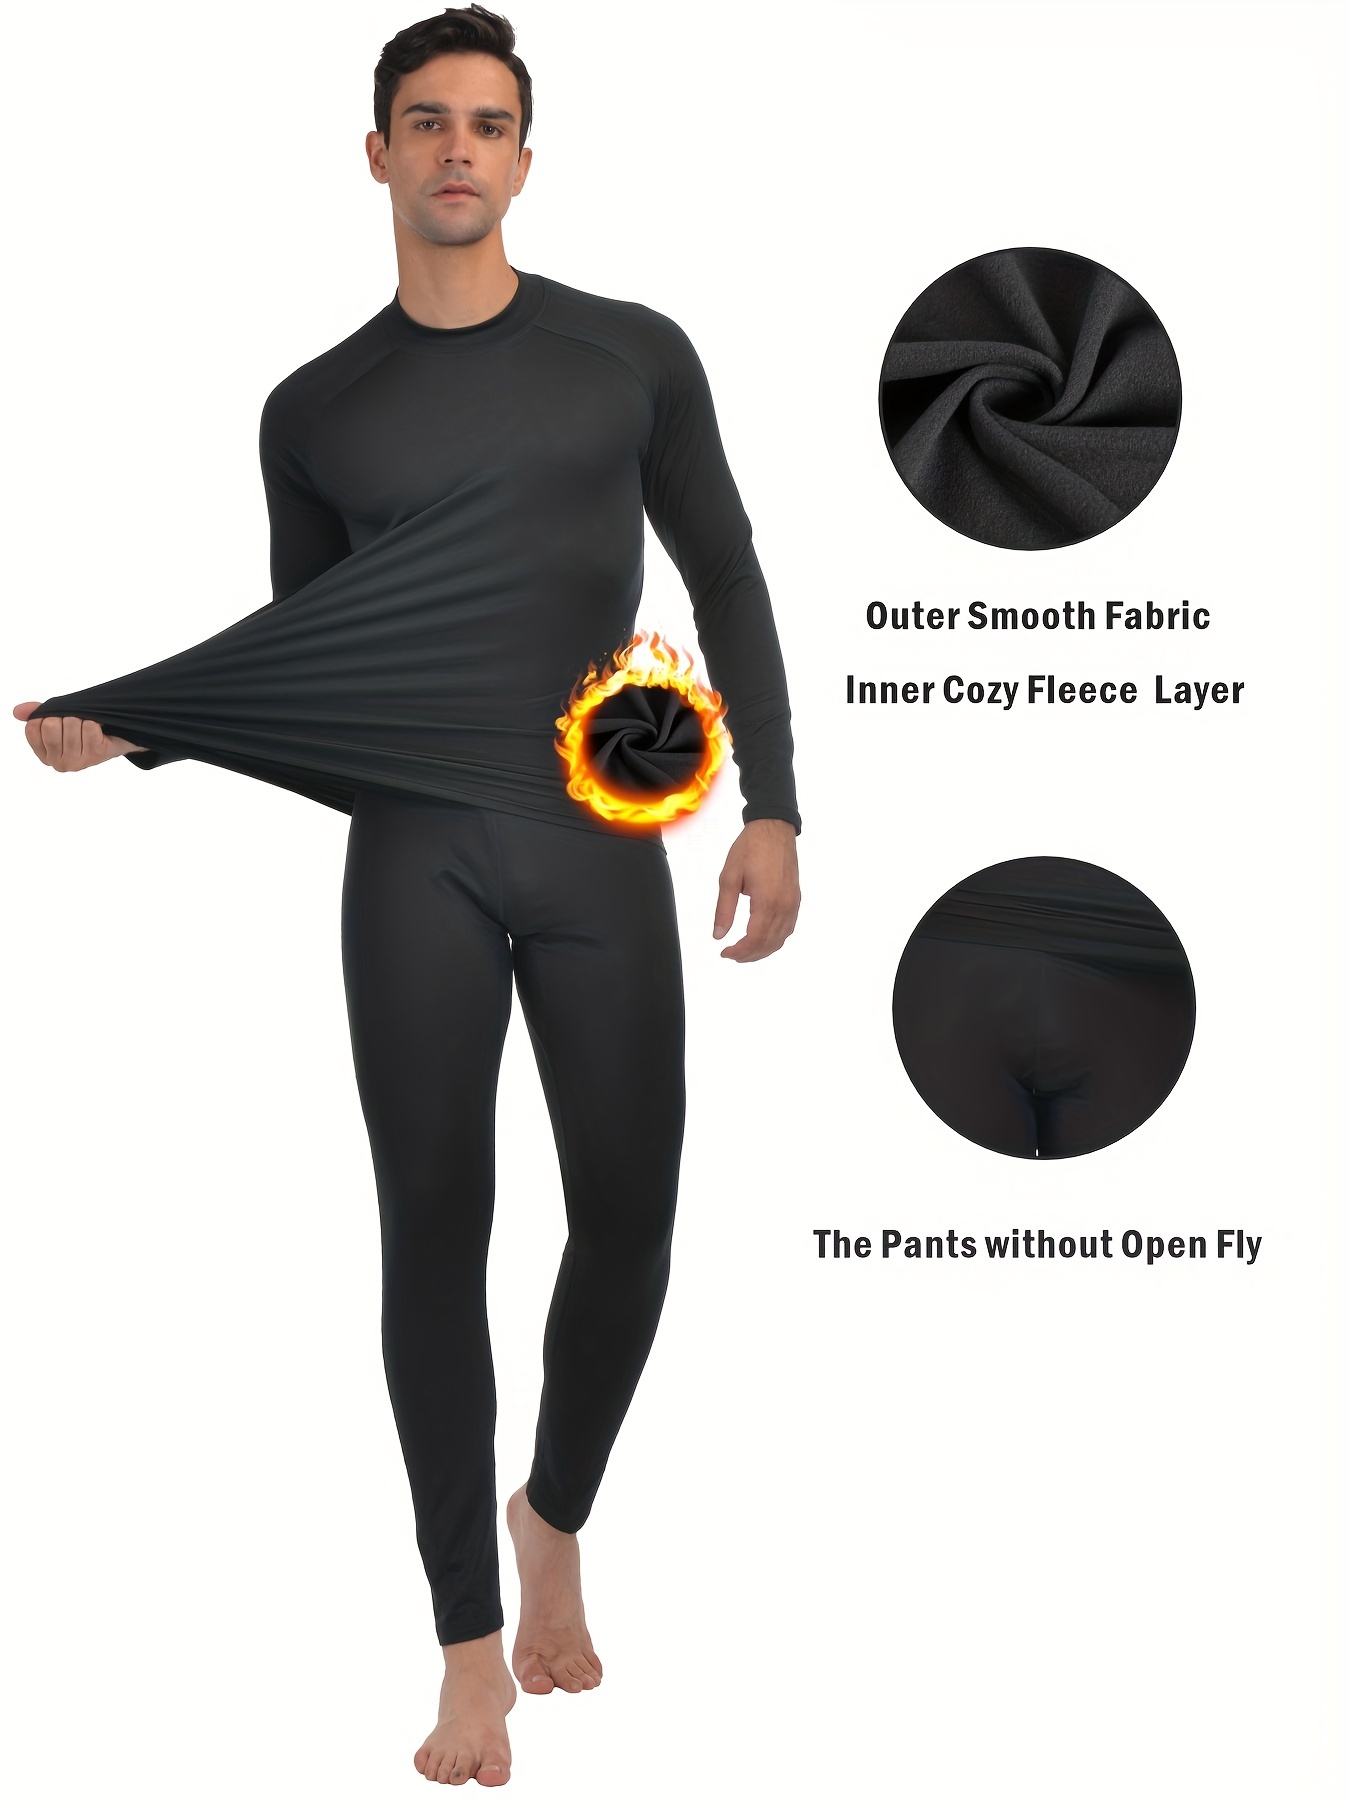 WEERTI Thermal Underwear for Men, Long Johns Base Layer Fleece